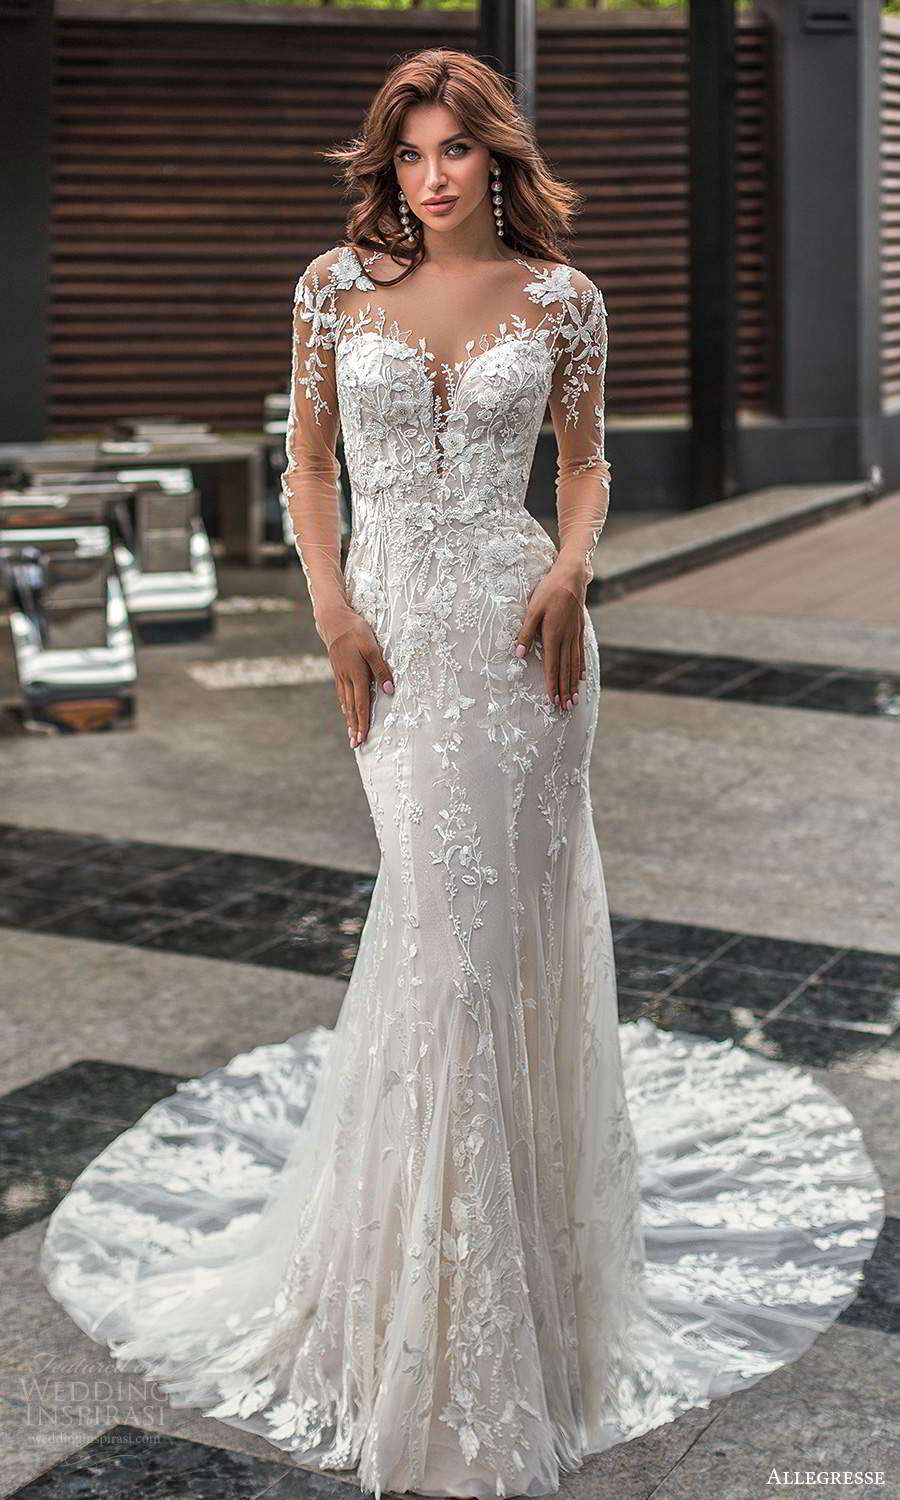 allegresse 2021 bridal illusion long sleeves plunging sweetheart neckline fully embellished sheath wedding dress chapel train (2) mv